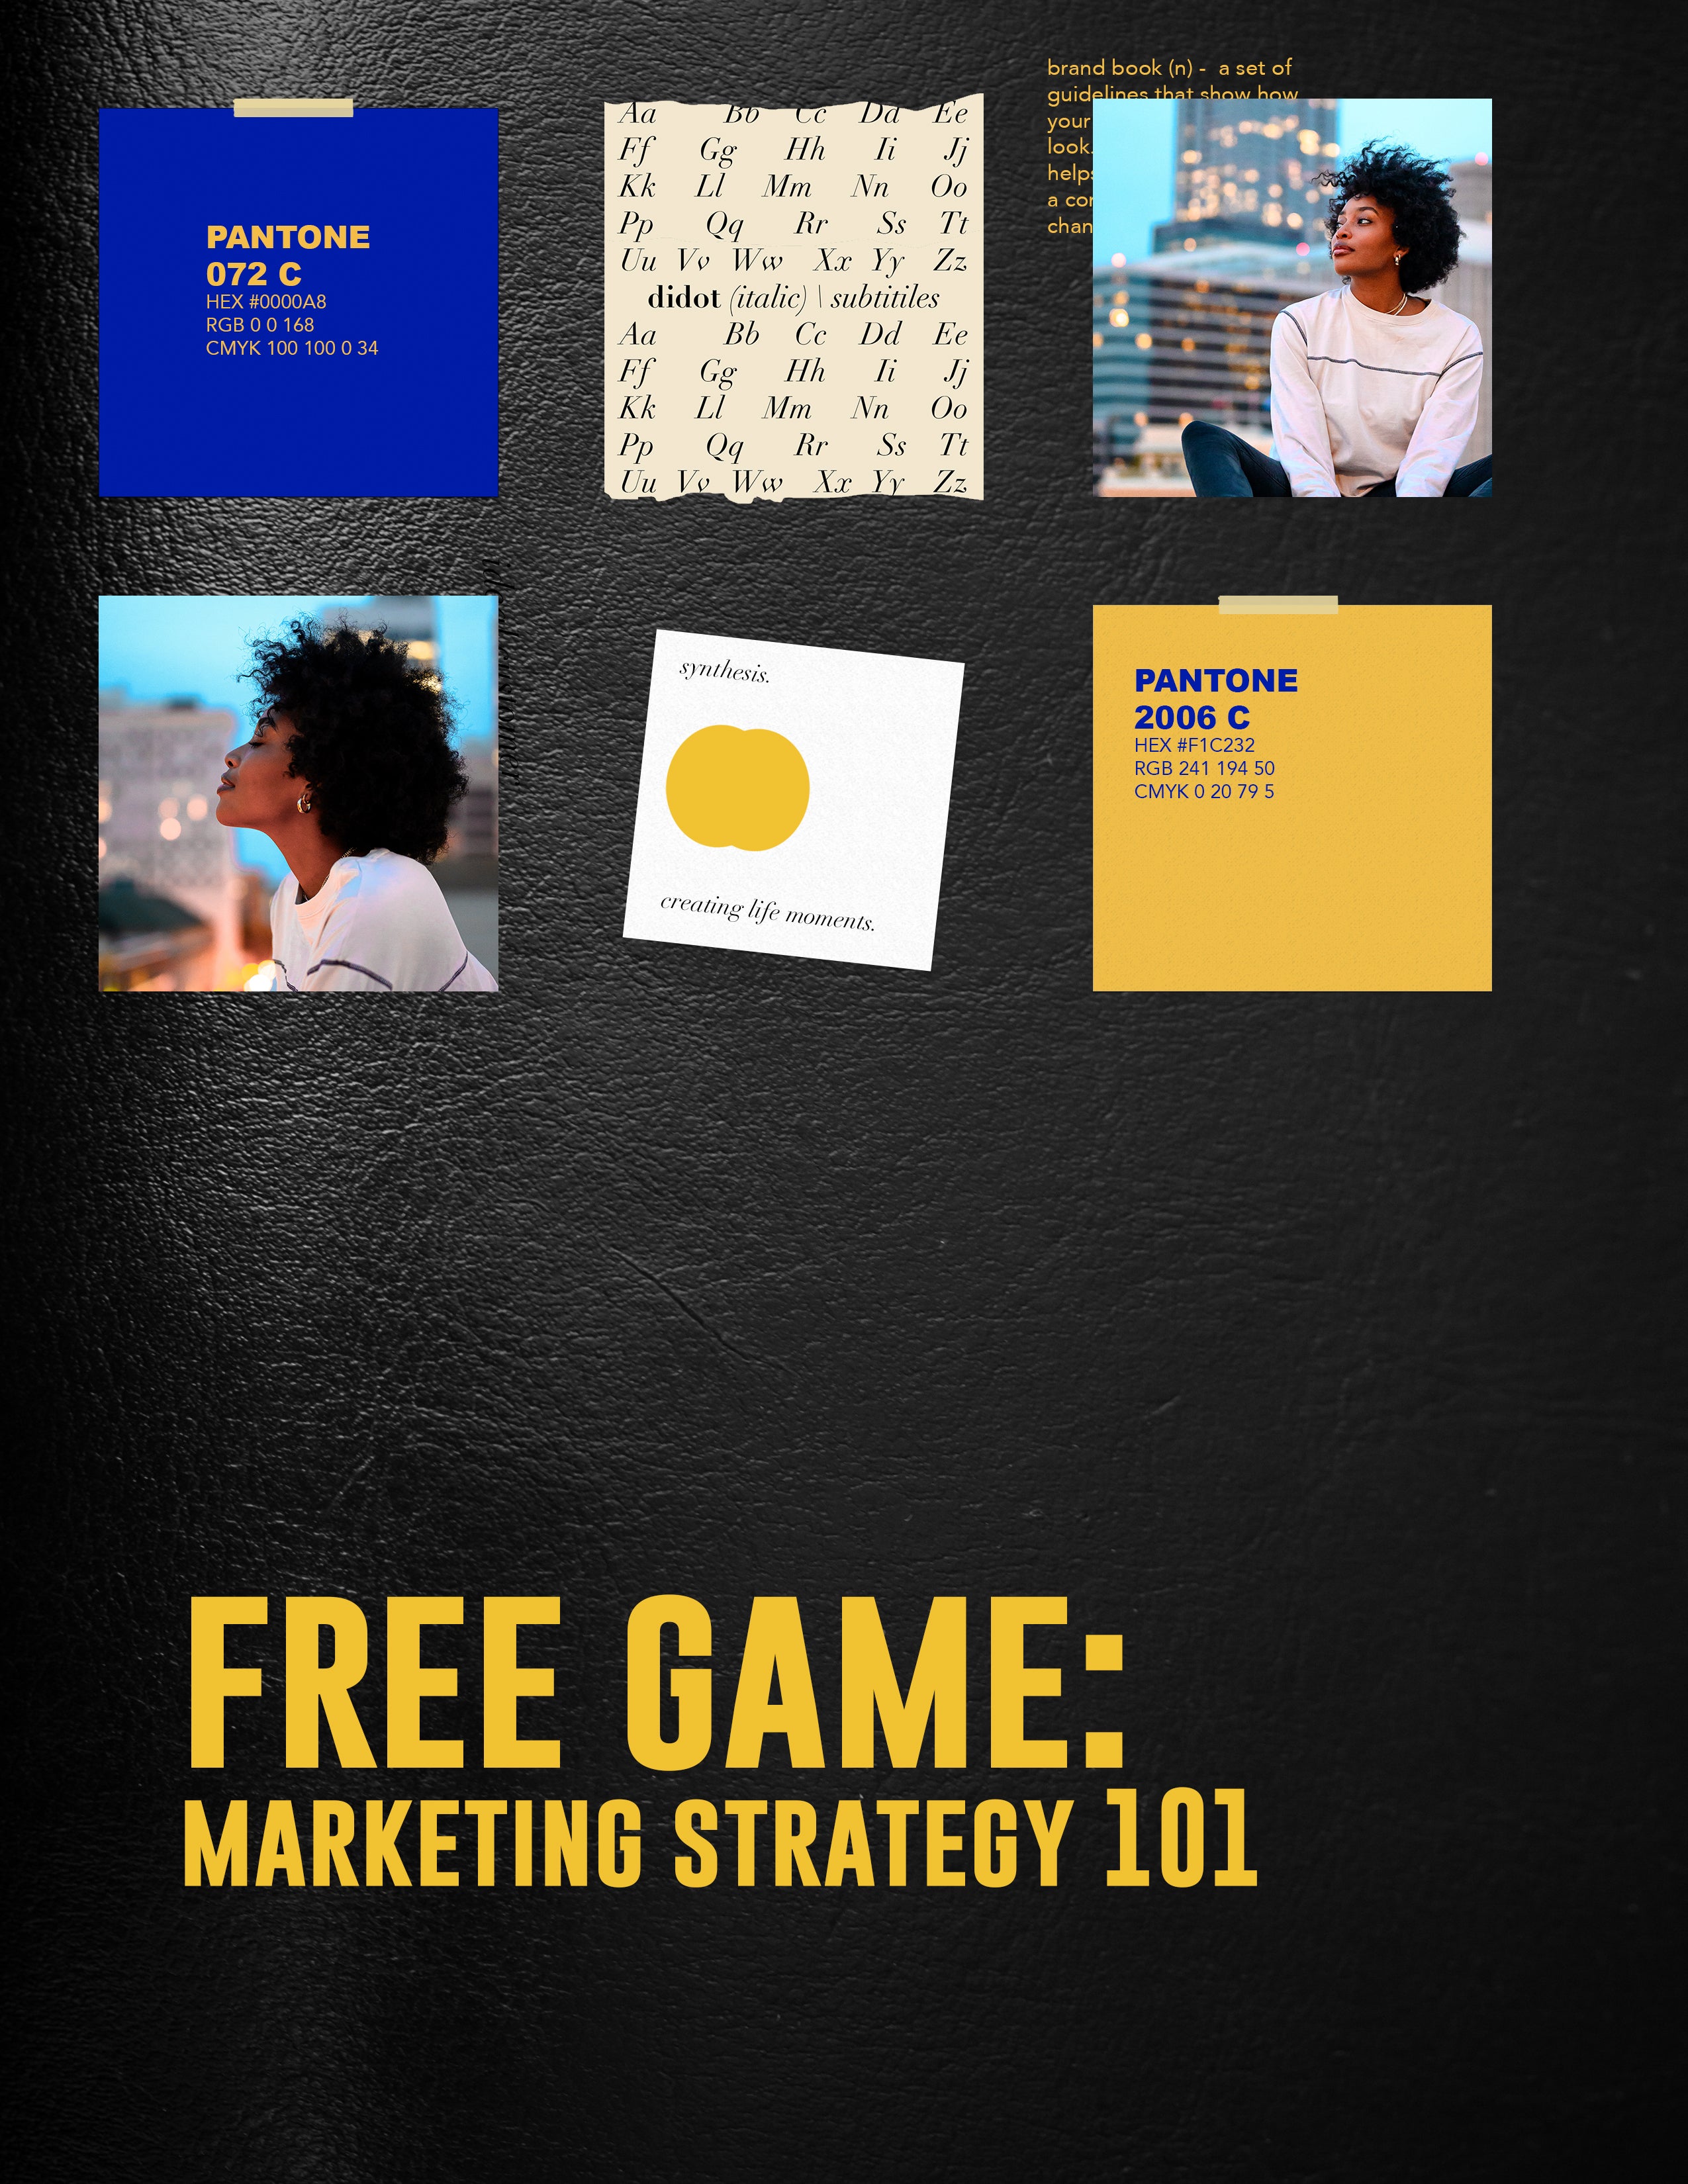 FREE GAME - Marketing Strategy 101